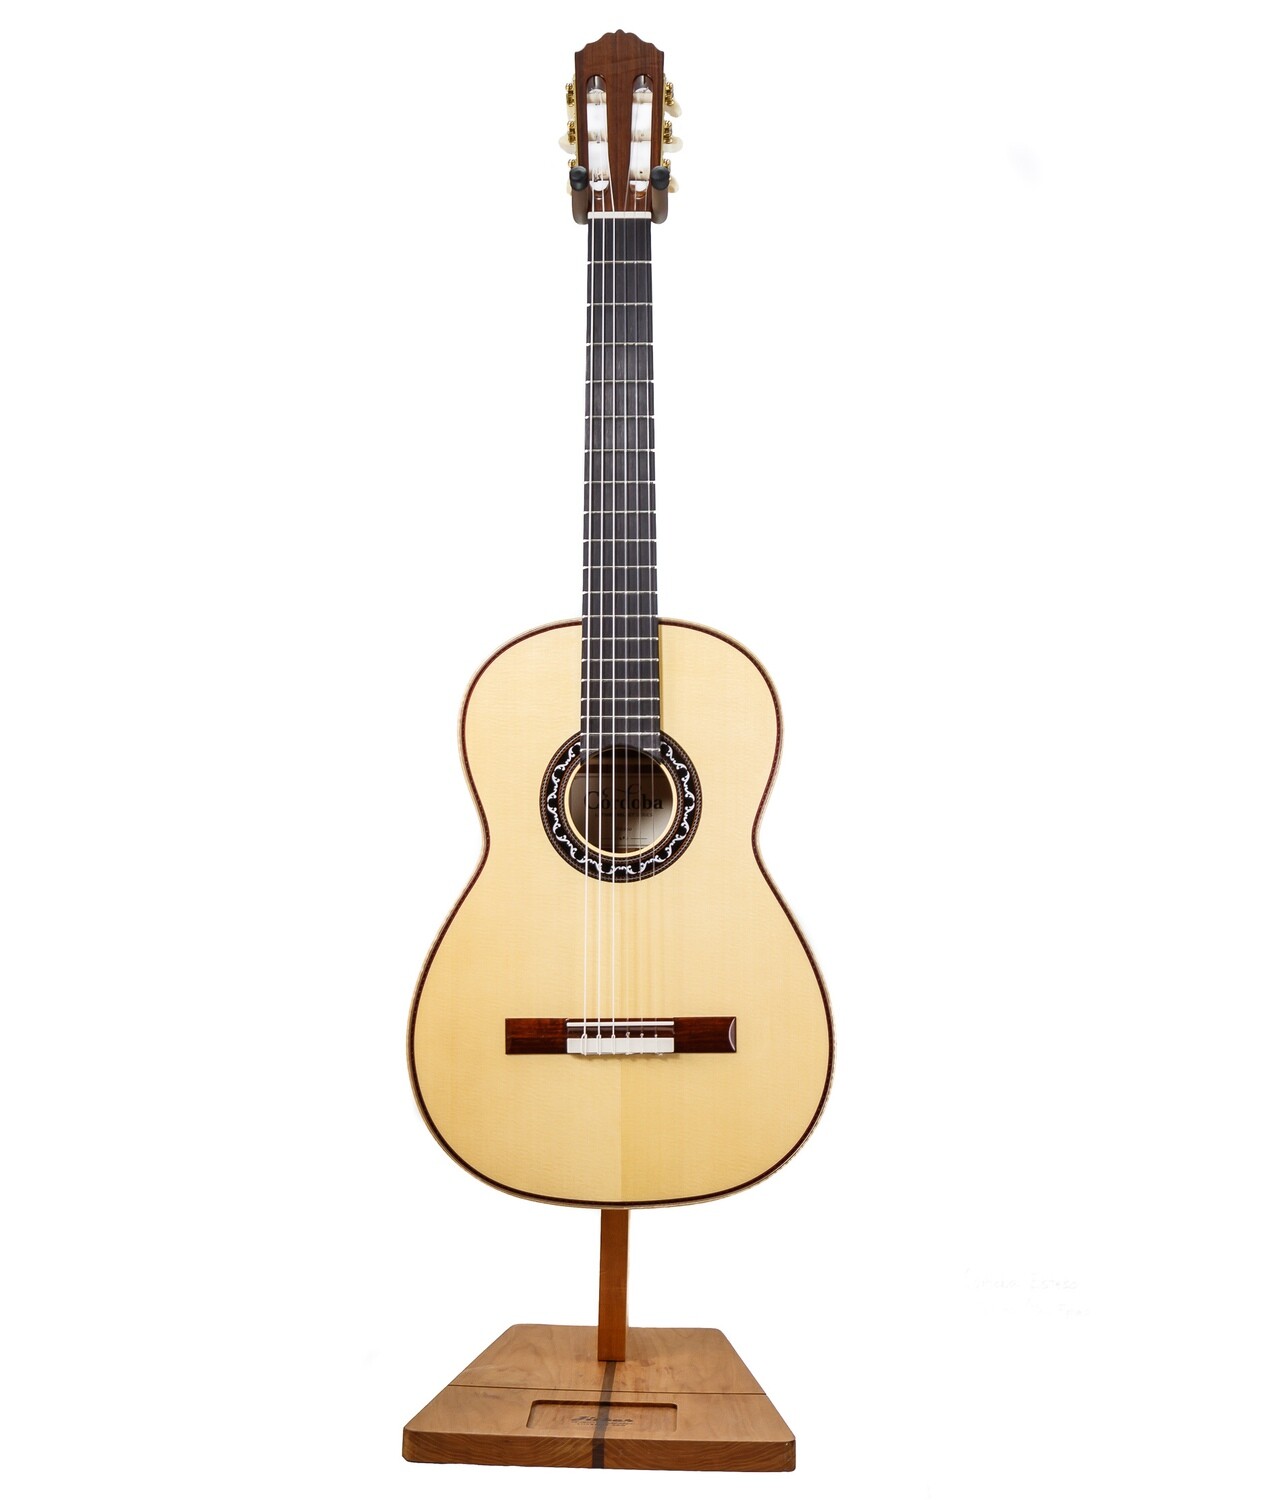 Cordoba Esteso - All Solid Wood - European Spruce Top, Pau Ferro Back/Sides  - Nylon String Classical Guitar